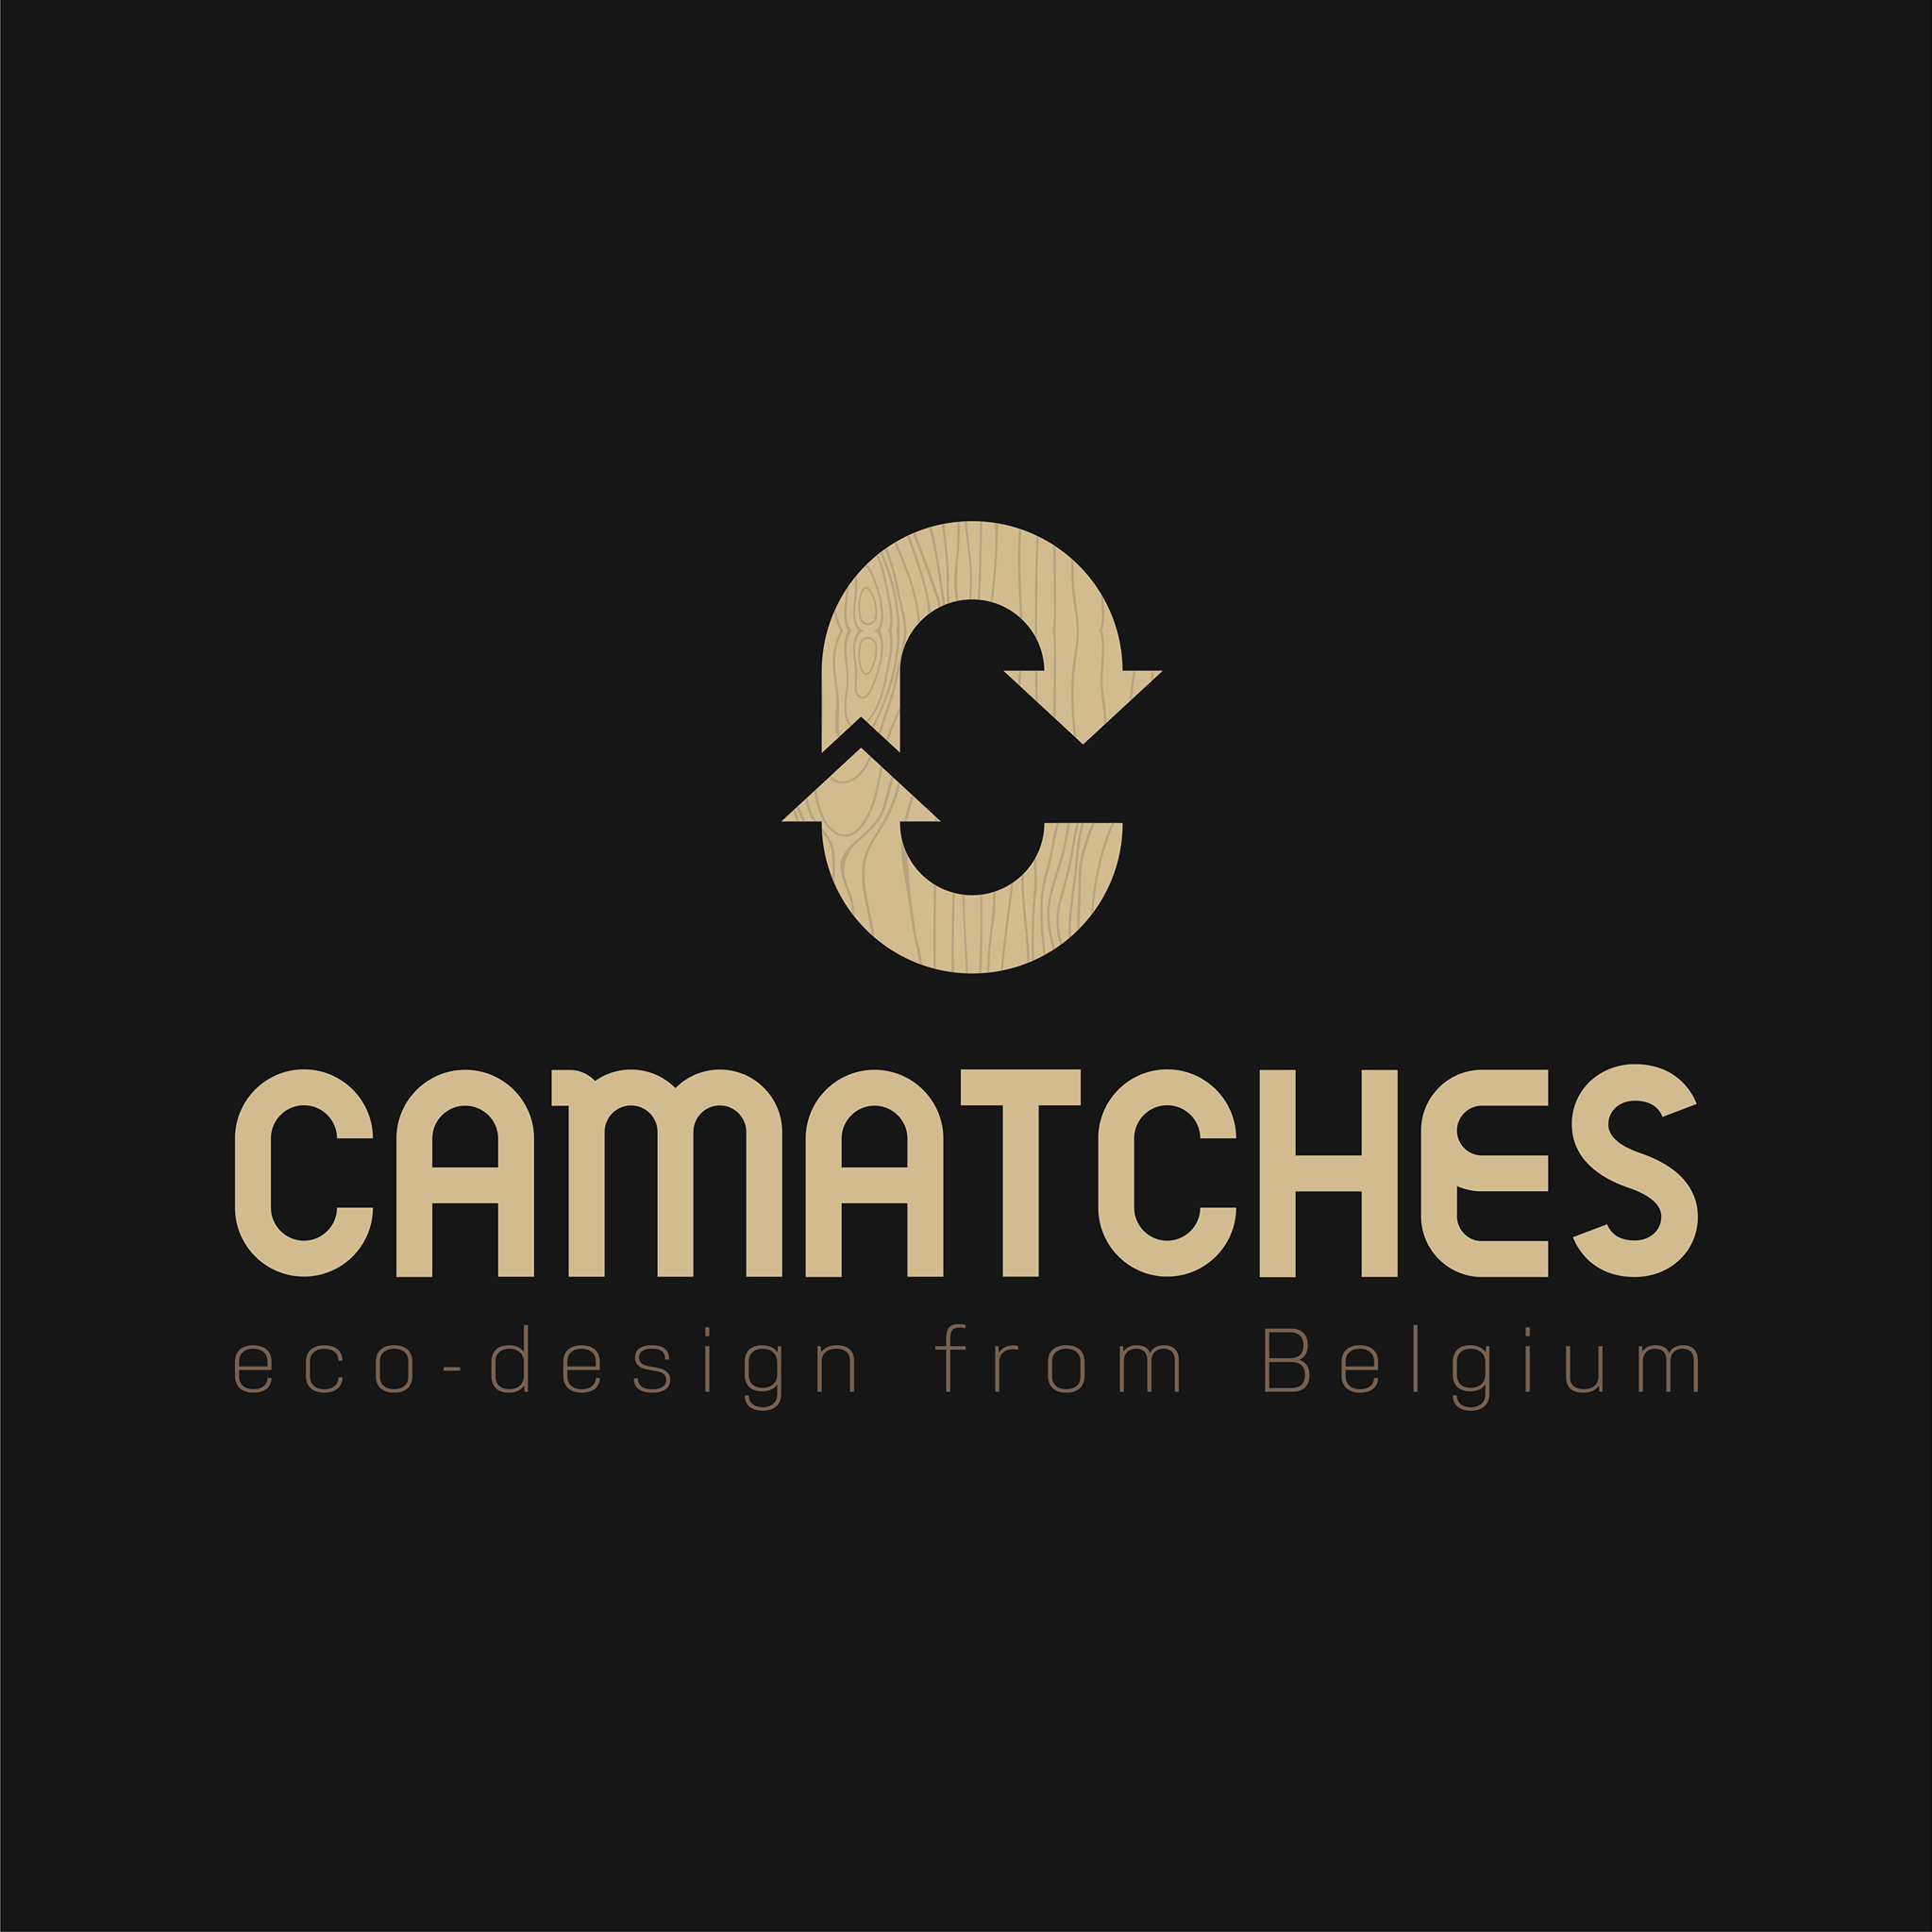 Camatches